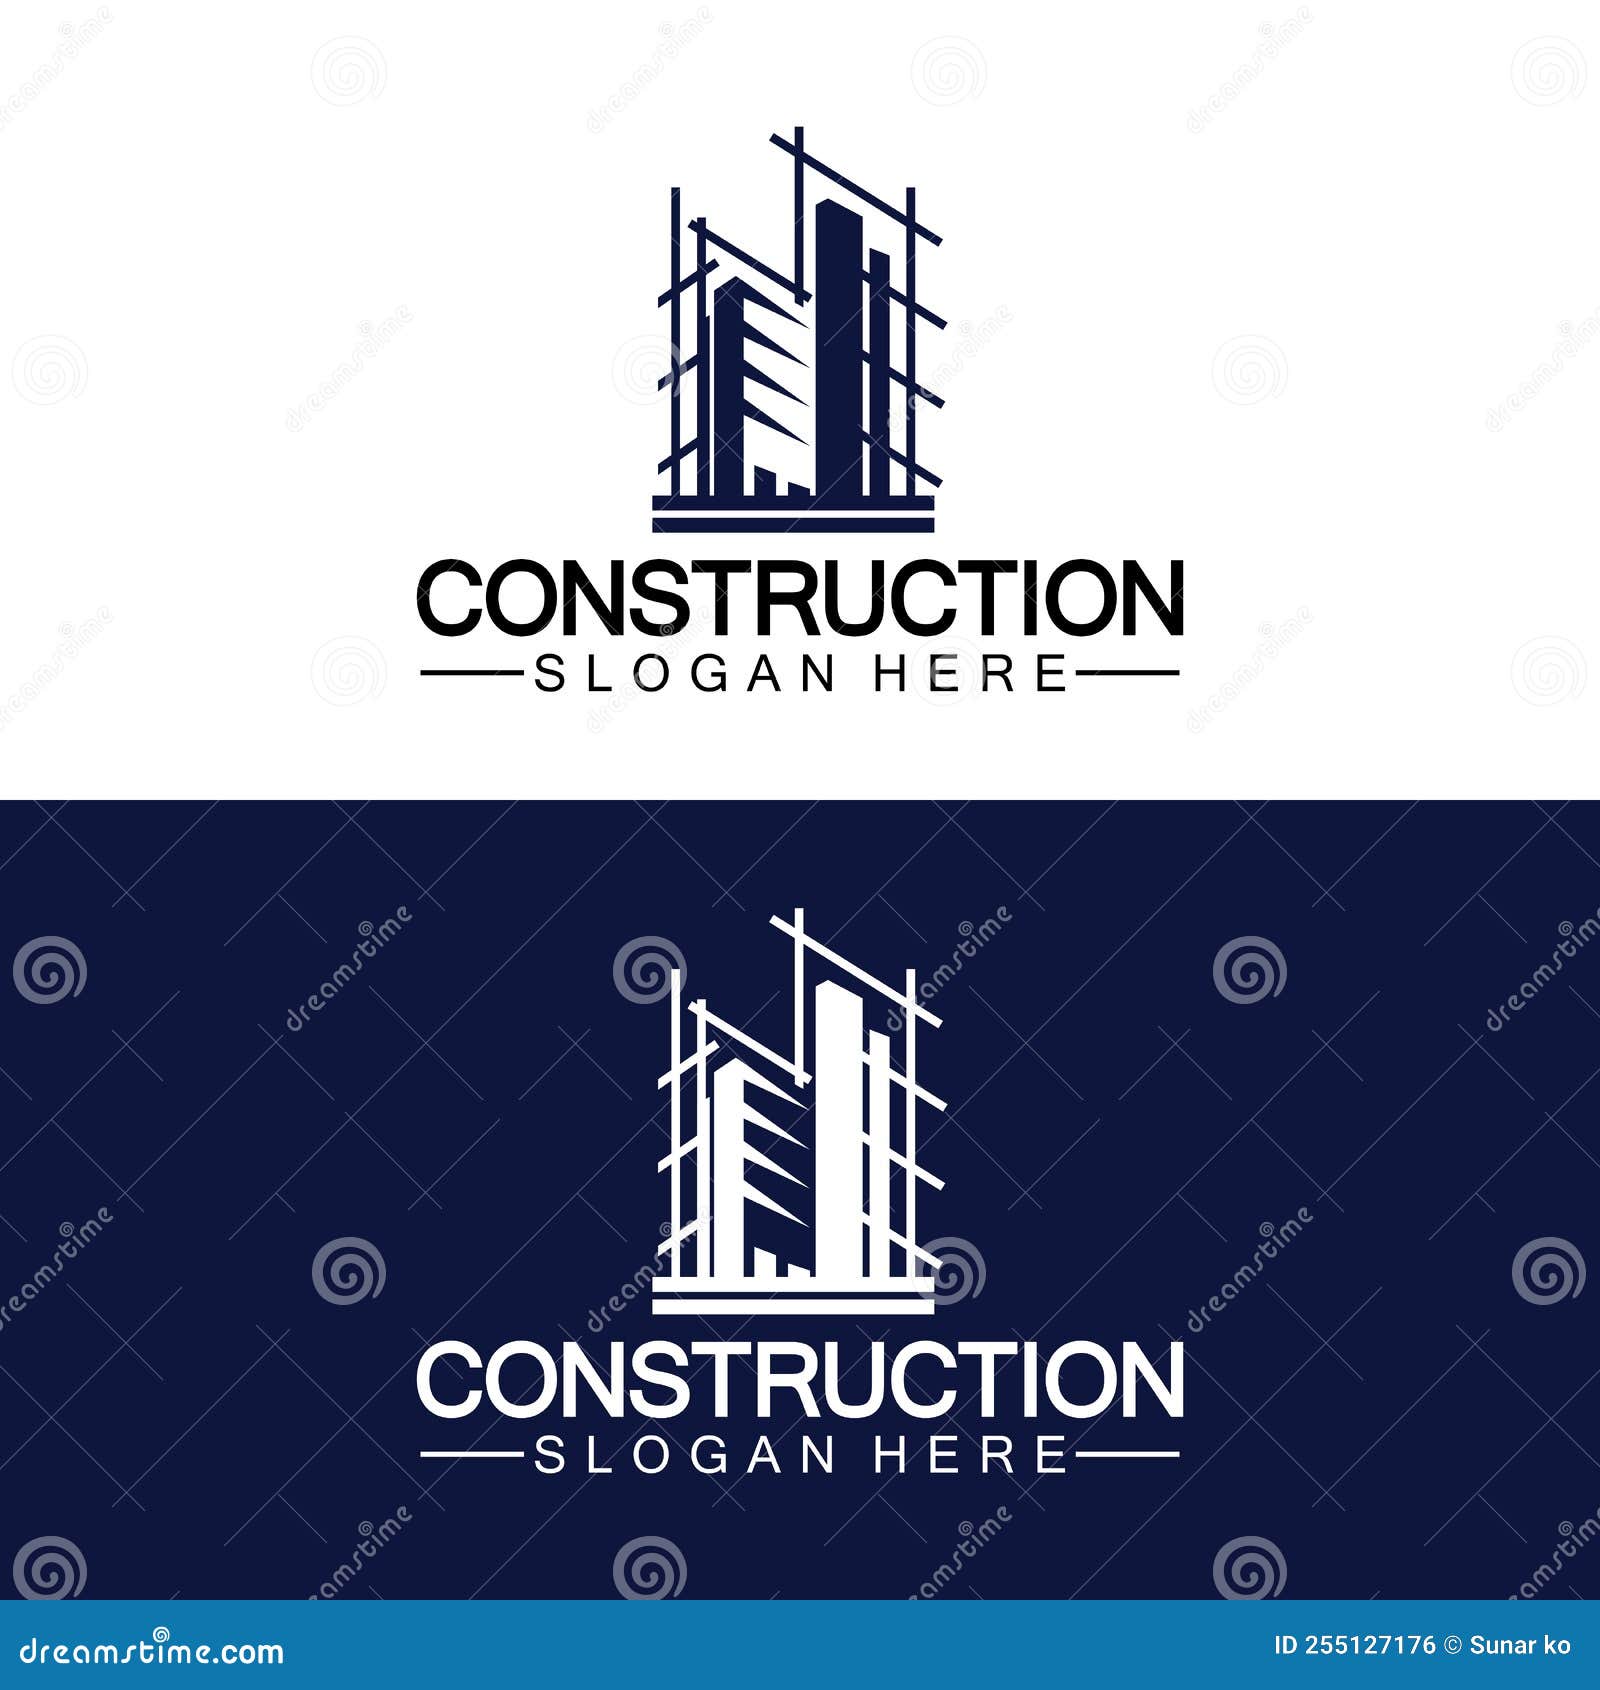 Construction, Home Repair, and Building Concept Logo Design, Home ...